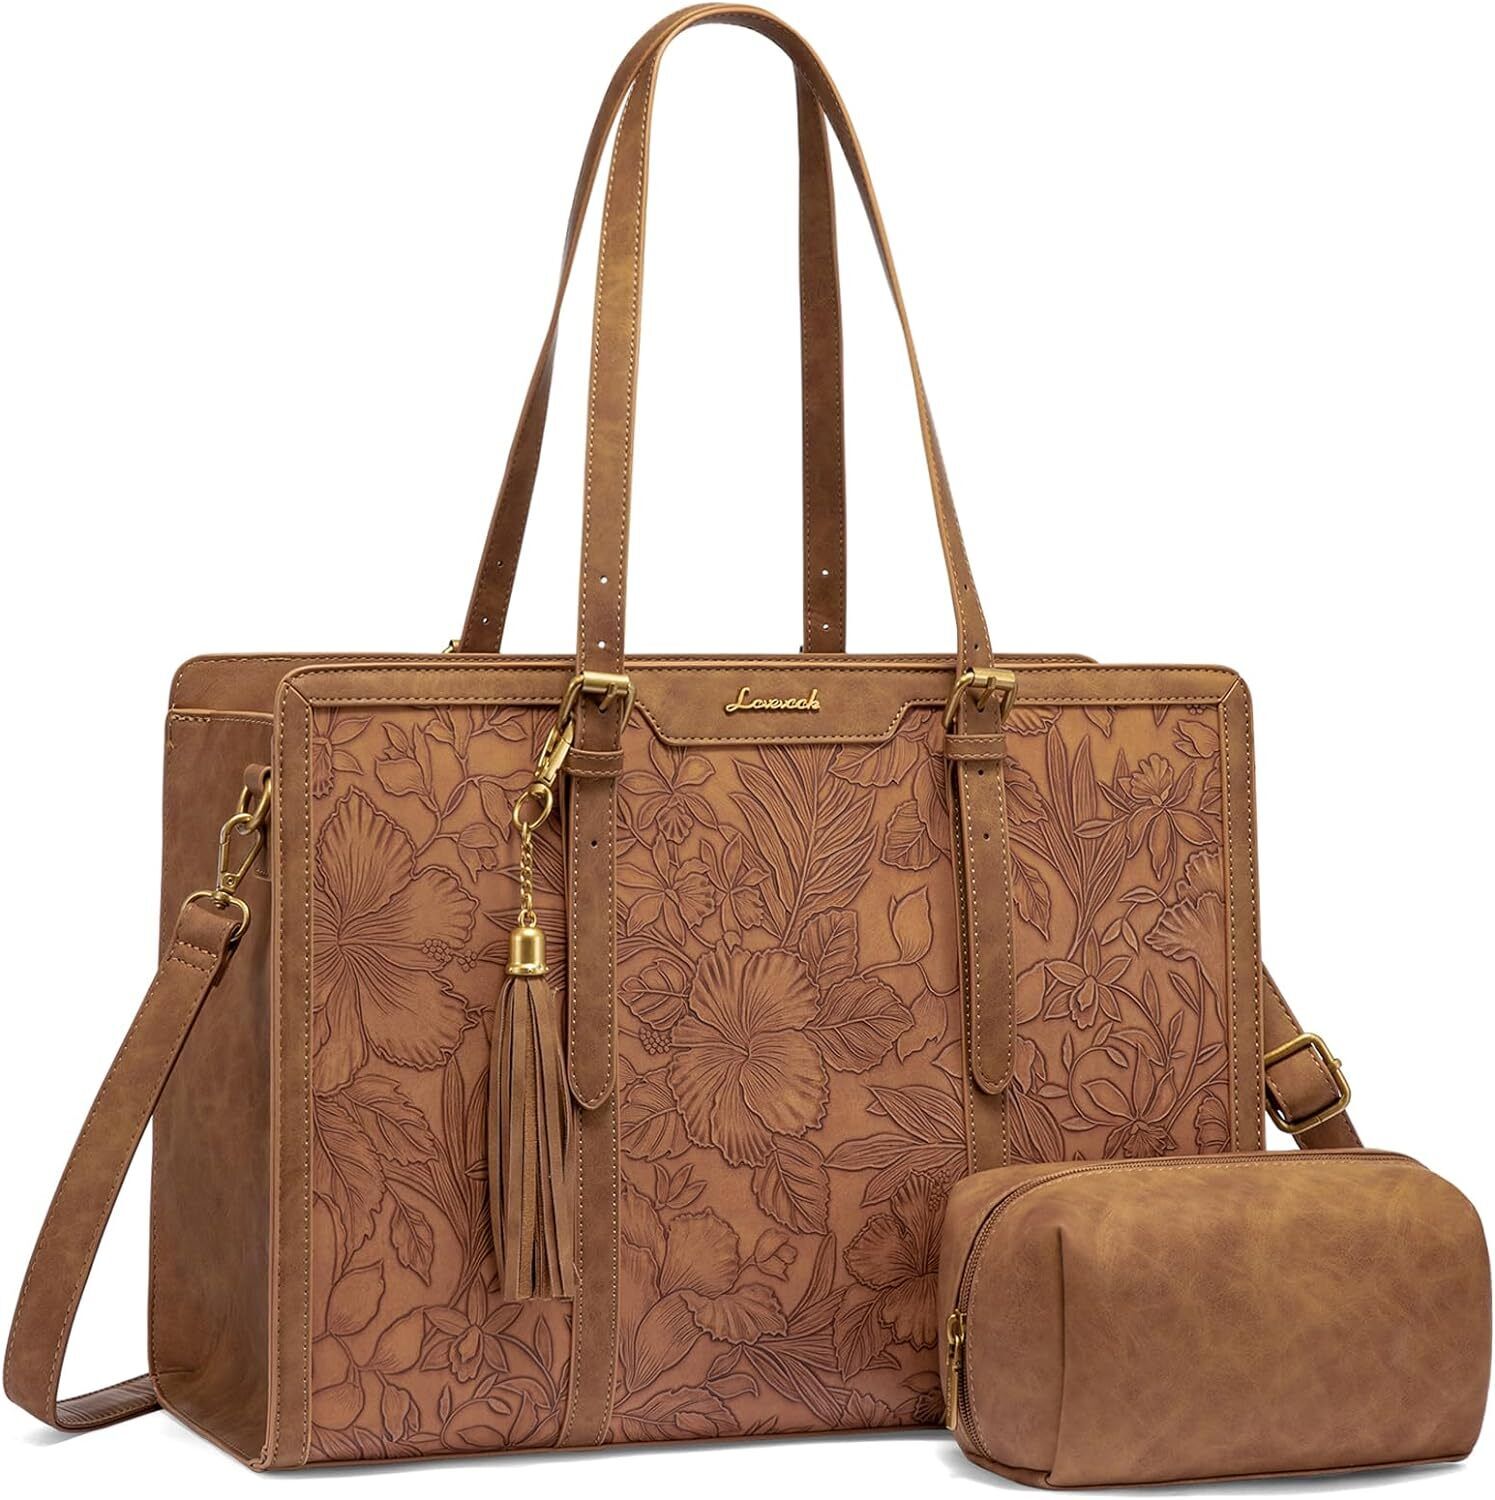 LOVEVOOK Laptop Bag for Women Vintage Leather Work 15.6 Inch, Brown Embossed 